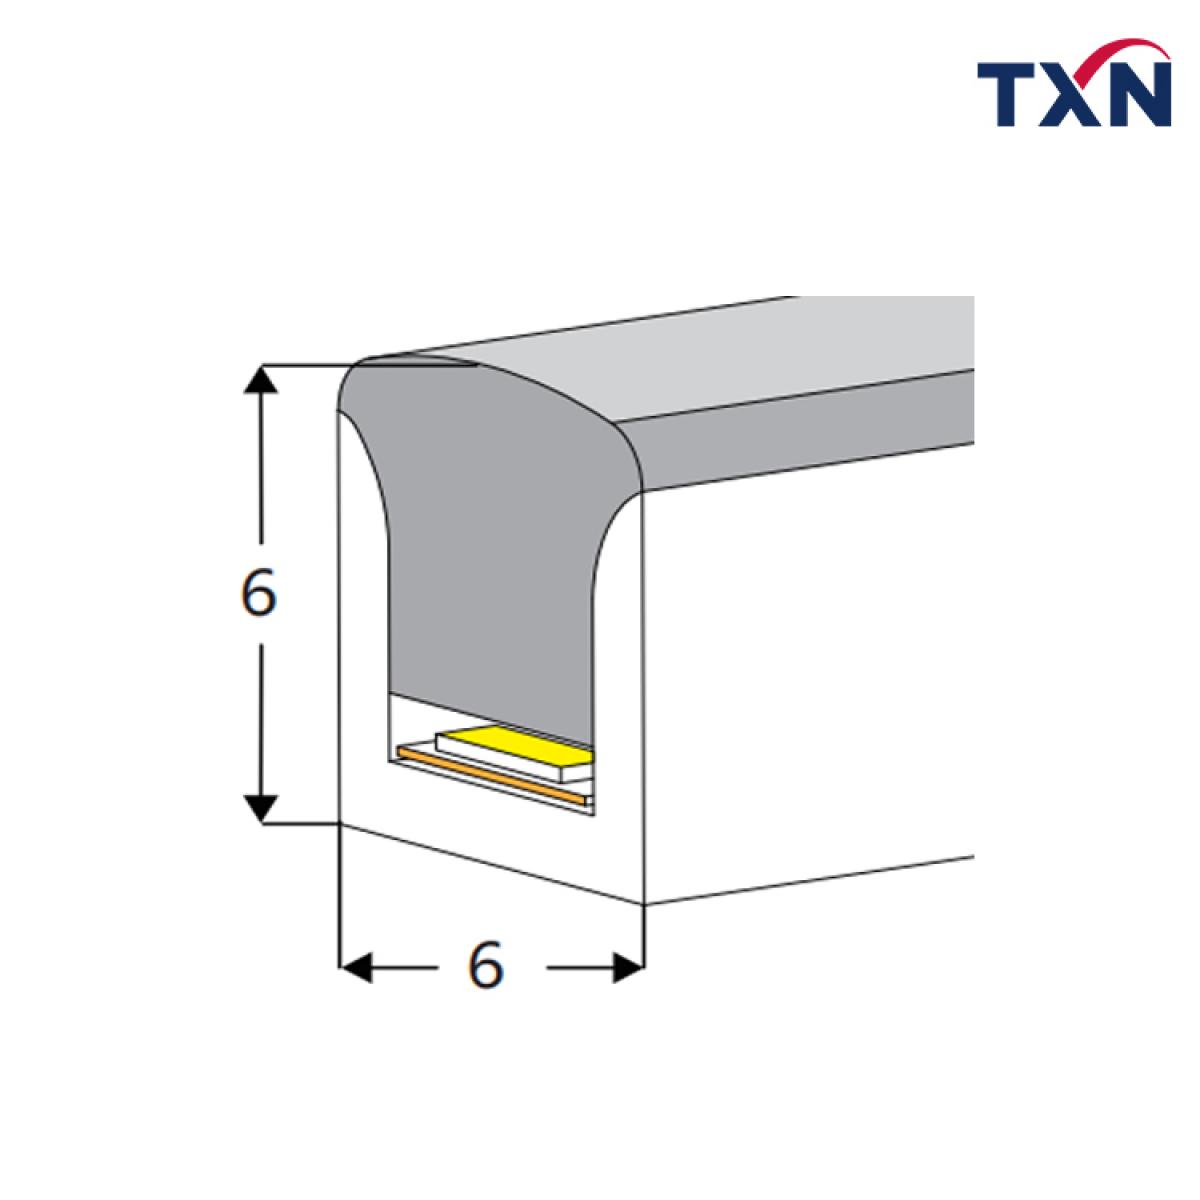 TXN-0606 06X06MM Silicone Tubing For Led Strip